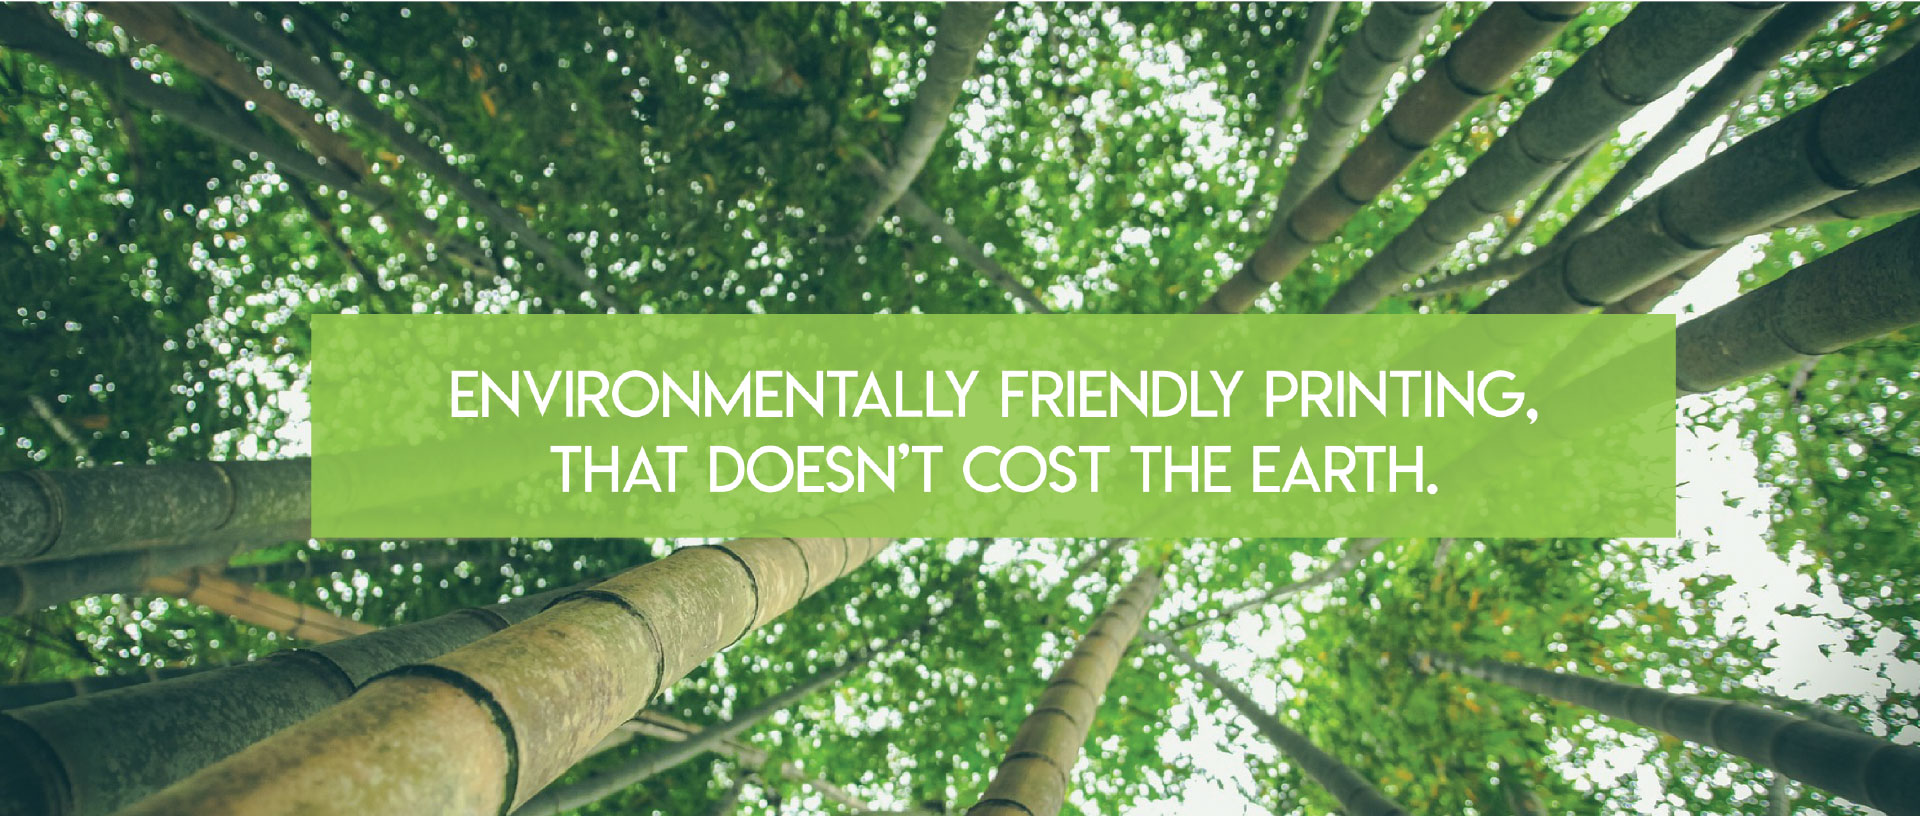 environmentally friendly printing